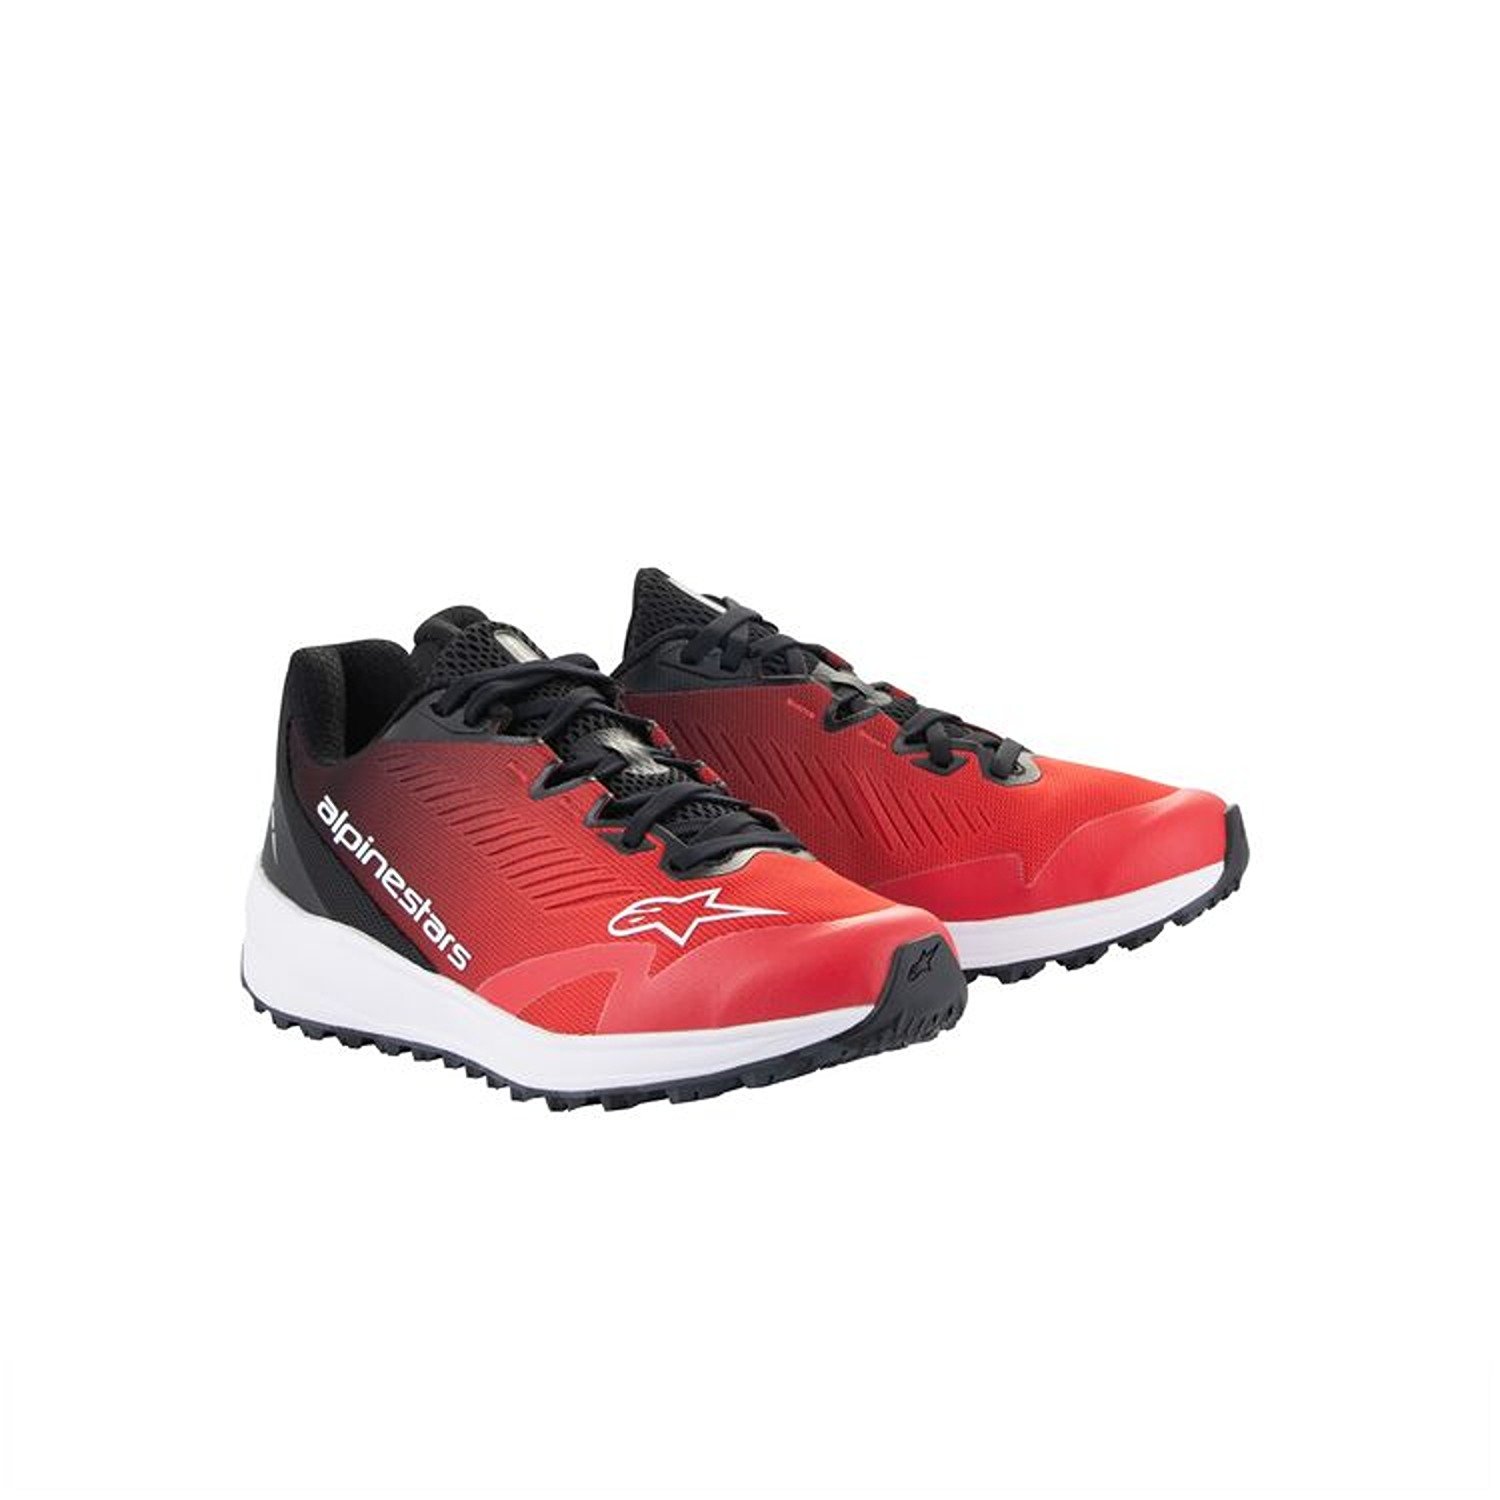 Image of Alpinestars Meta Road V2 Shoes Red Black White Size US 9 ID 8059347353562